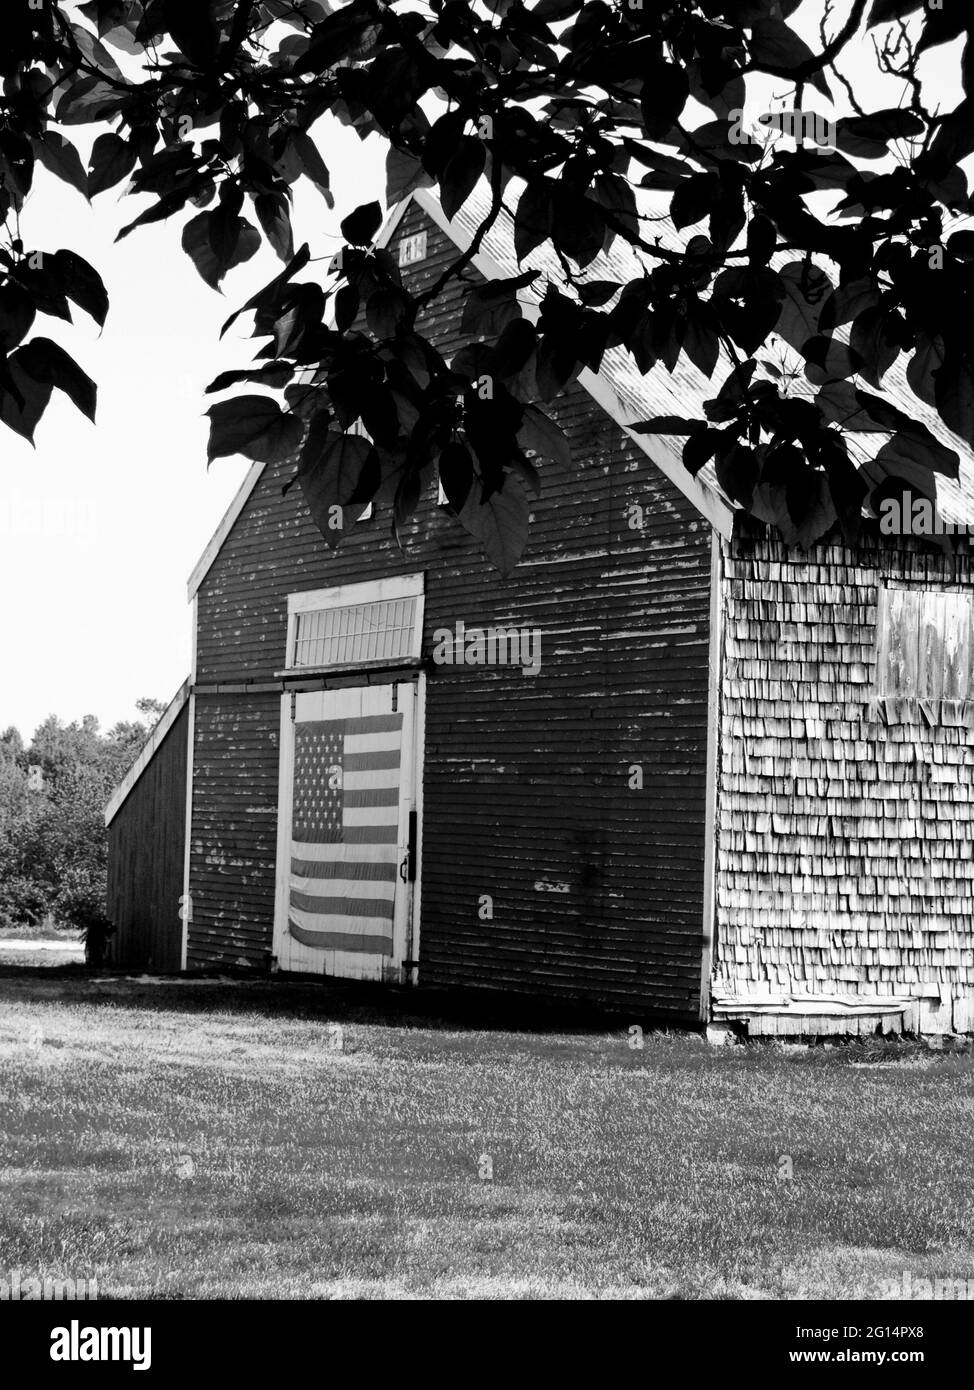 Photograph of an old barn with an American flag on the barn door, New England, USA. Stock Photo